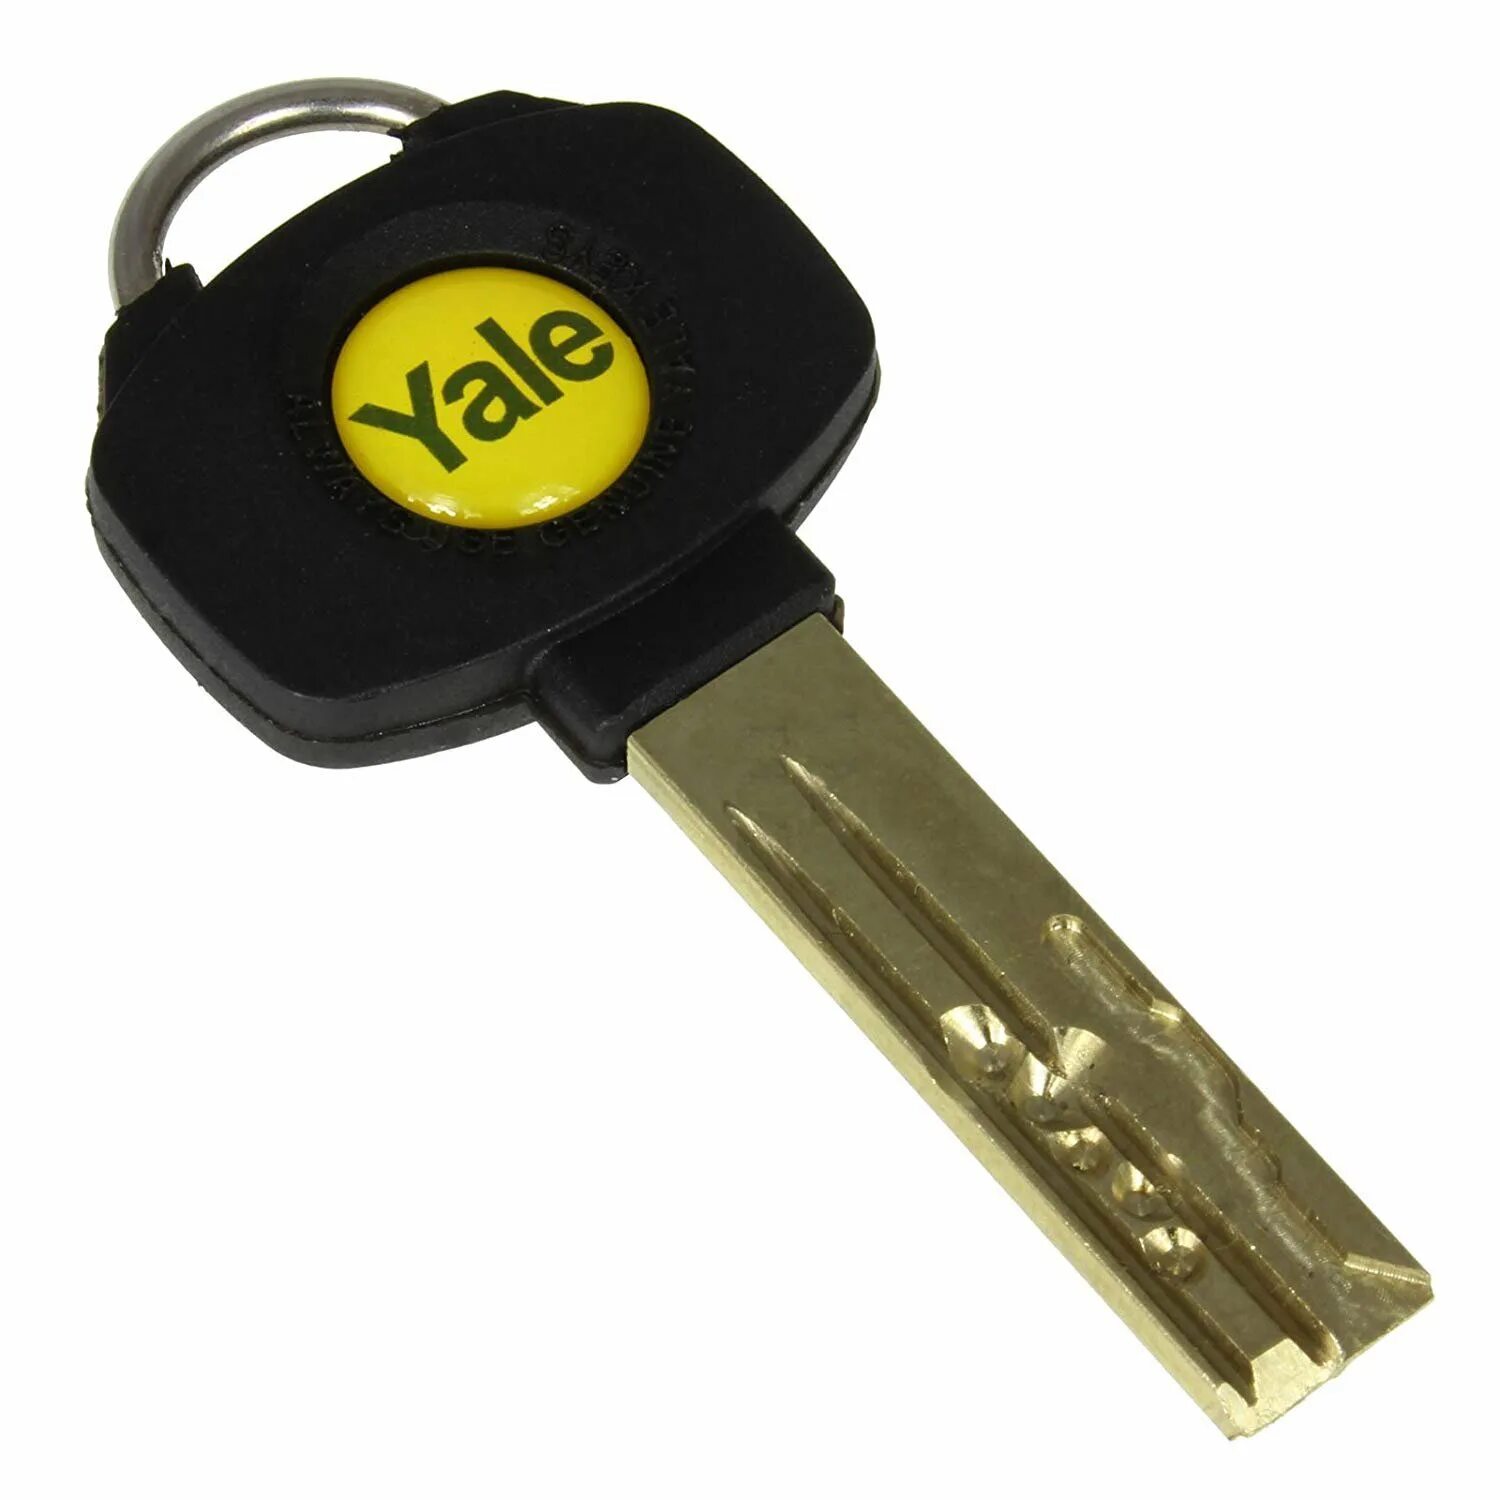 Extra keys. Yale Superior заготовка ключа. Yale ключа заготовка in. Ключ марка. Изготовить ключ Yale.